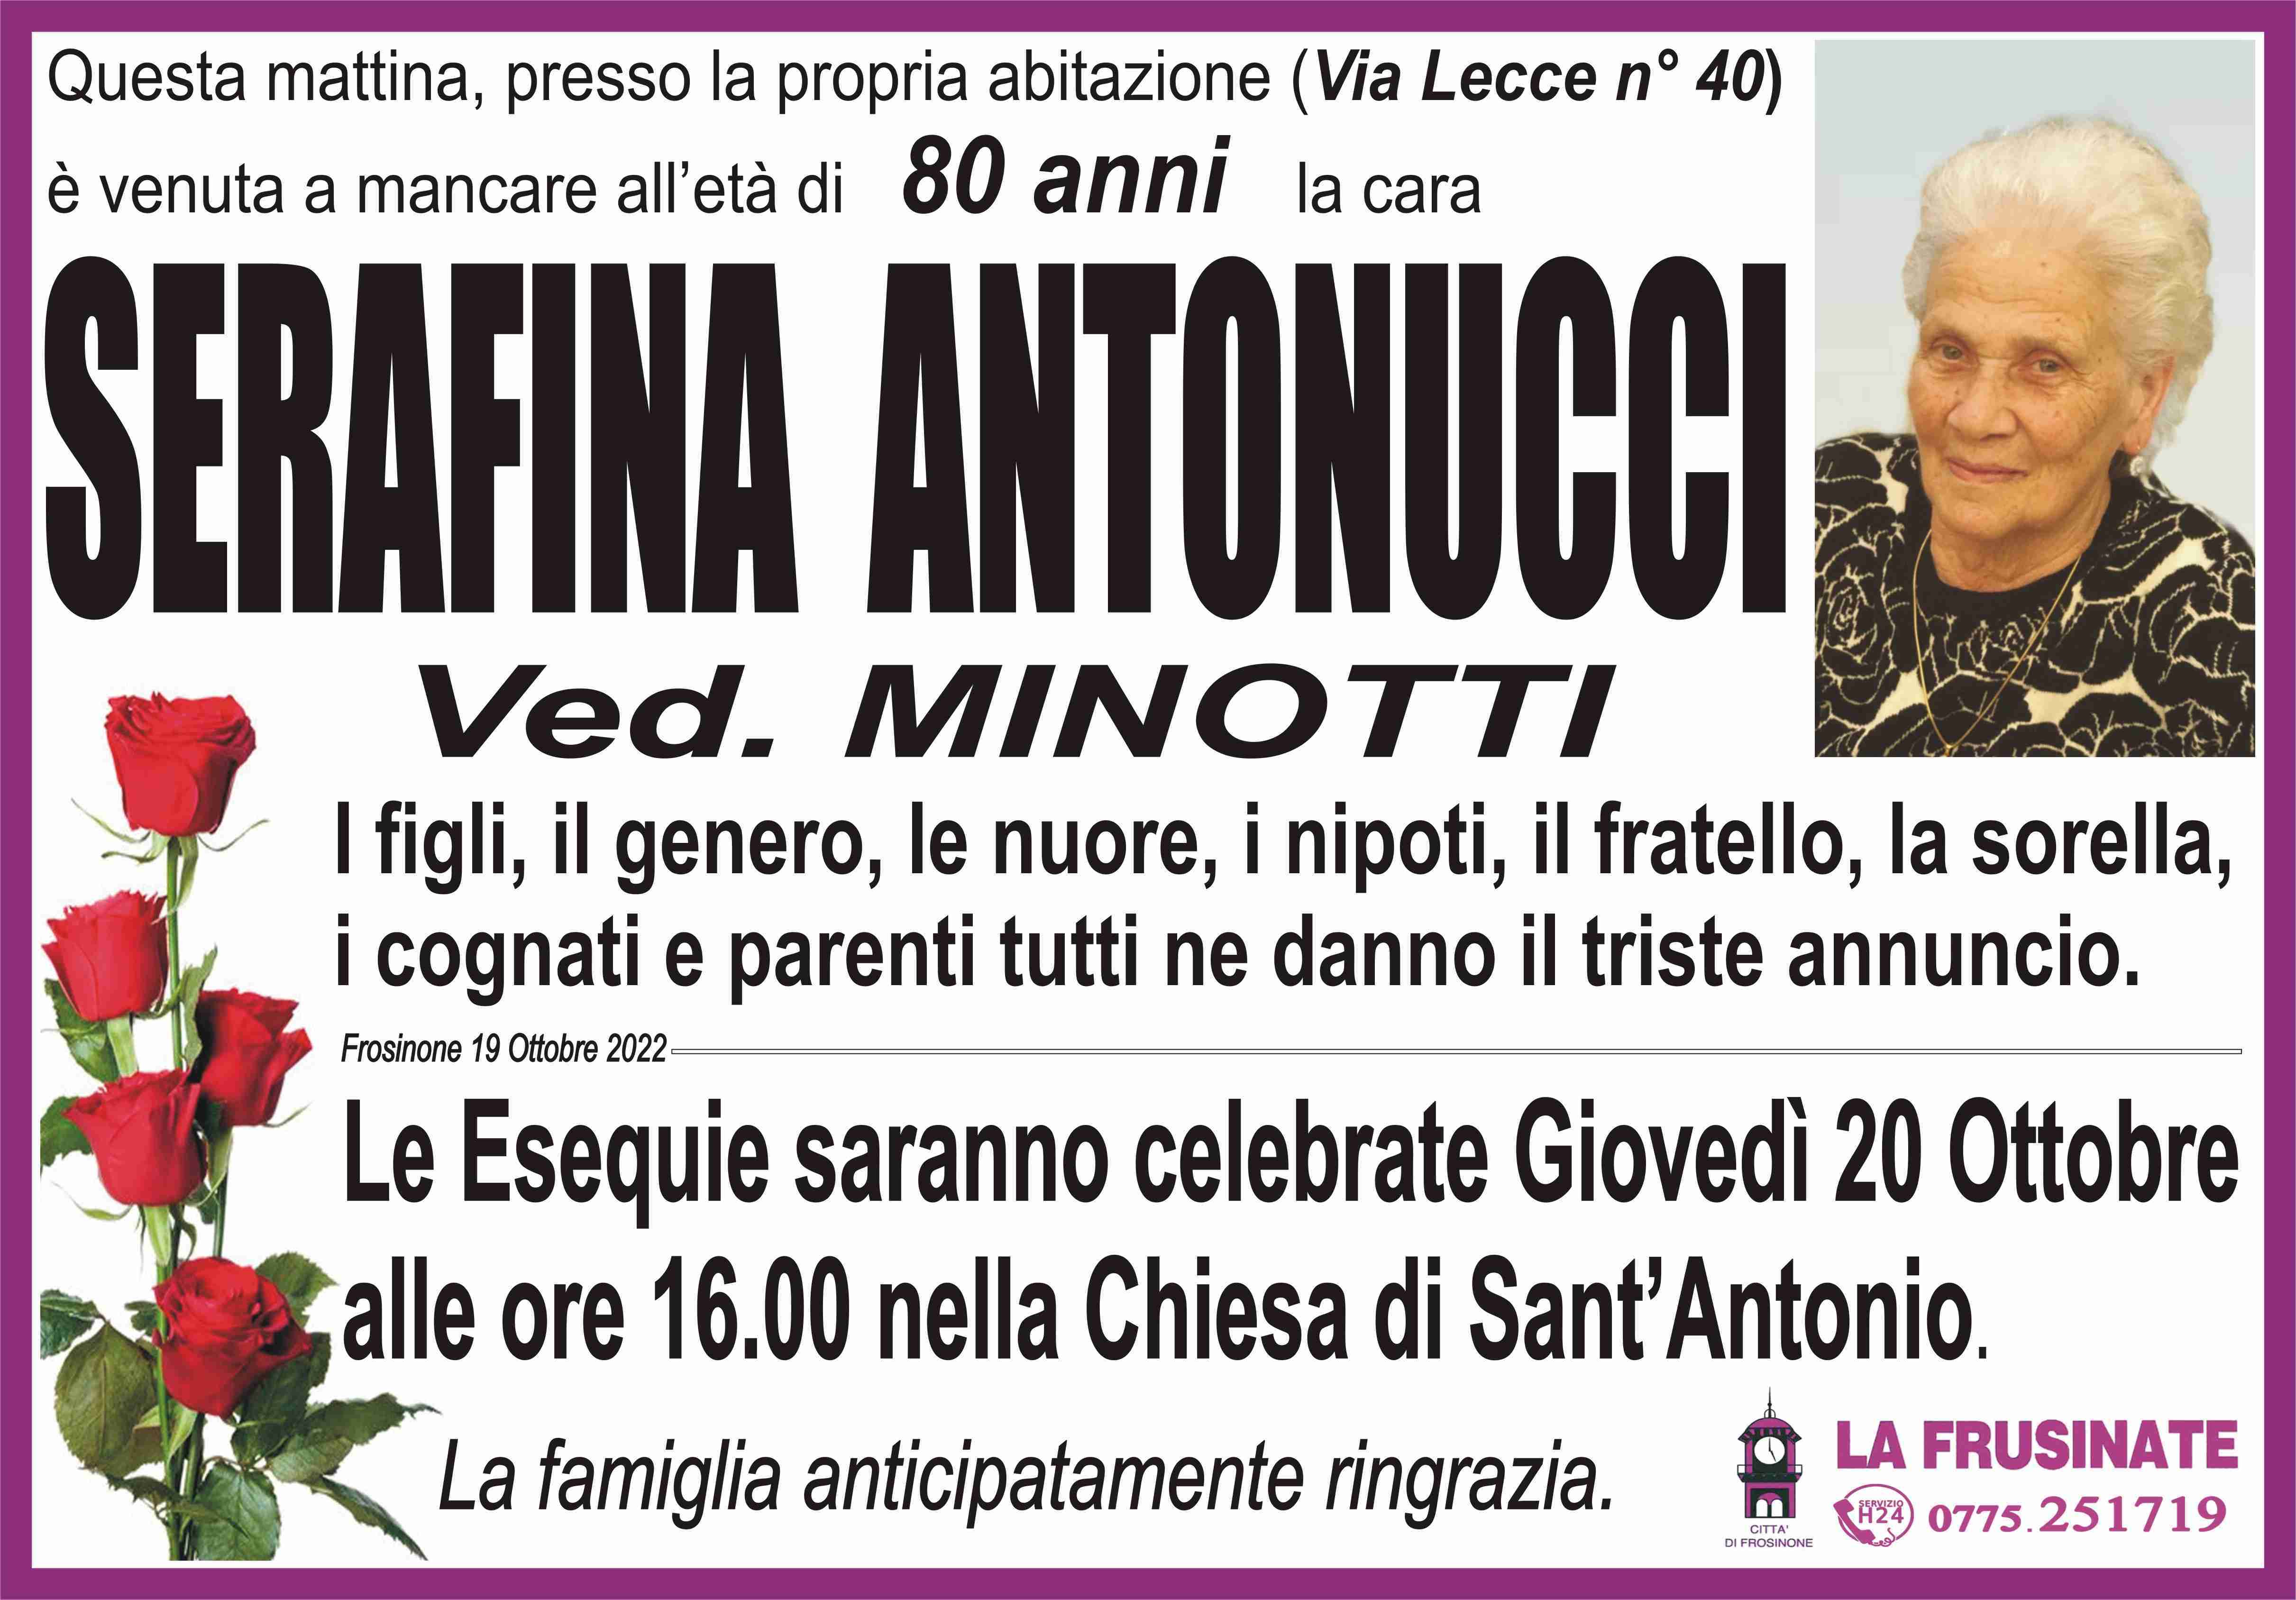 Serafina Antonucci